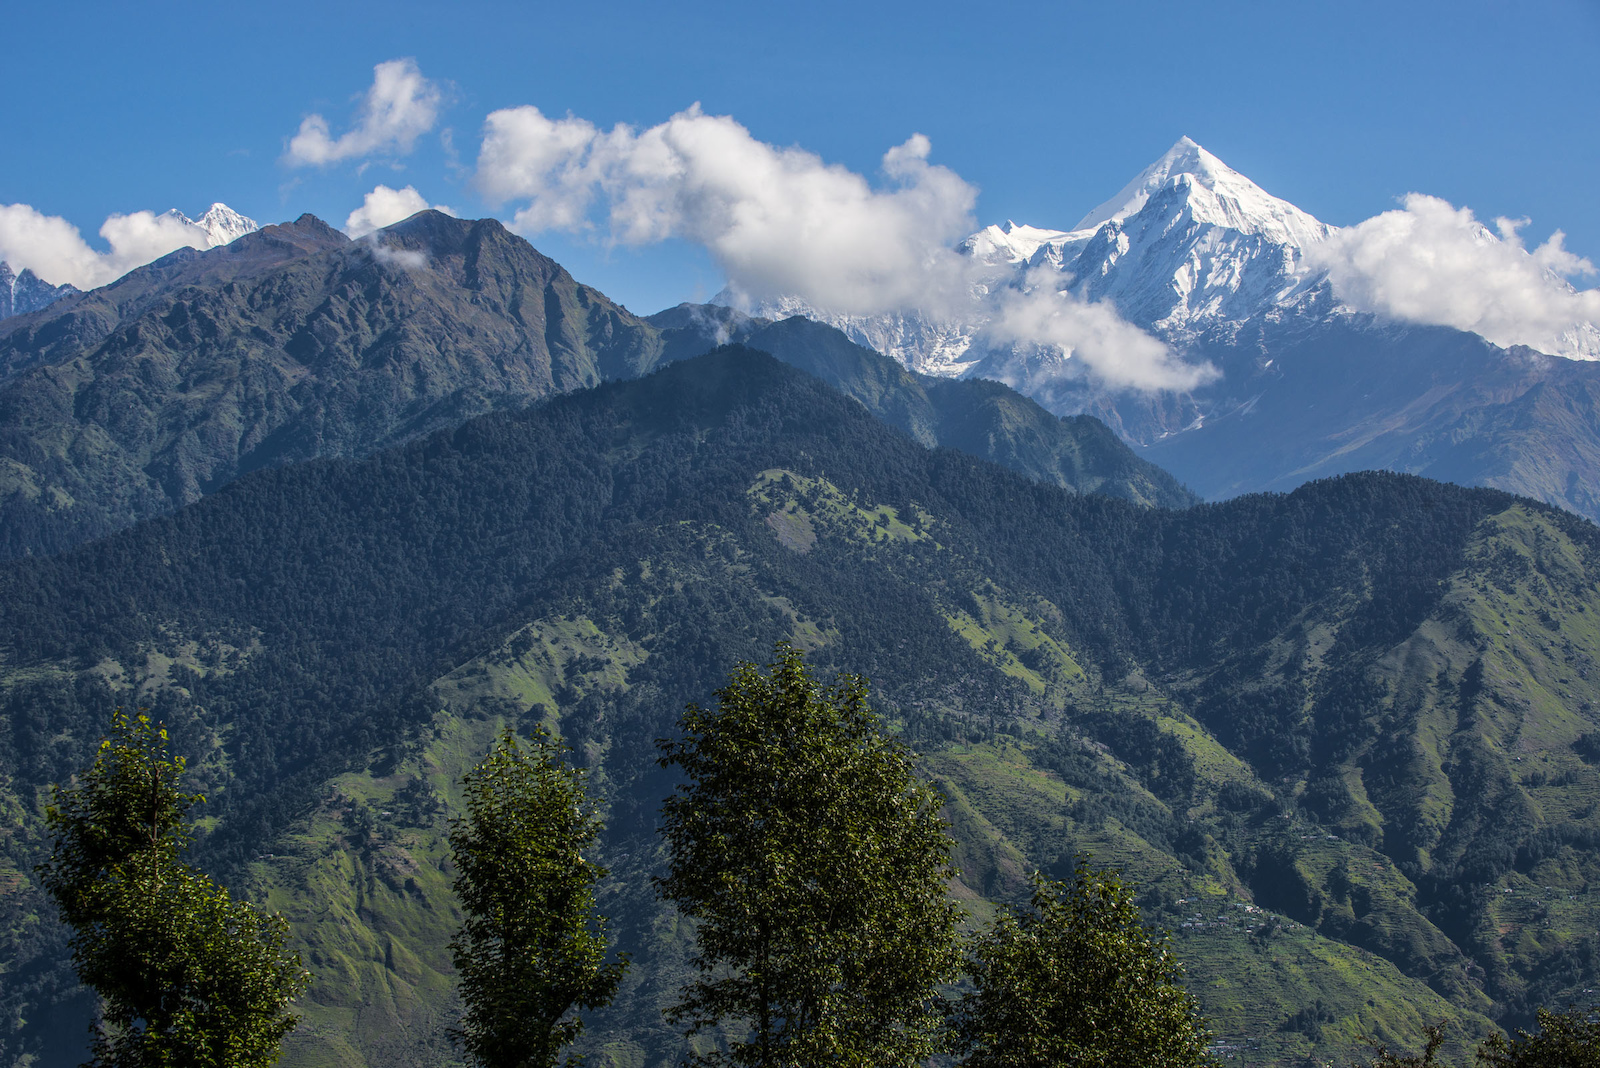 Munsyari Mountain Bike Survey, Uttarakhand, India.

PIC © Andy Lloyd
www.andylloyd.photography